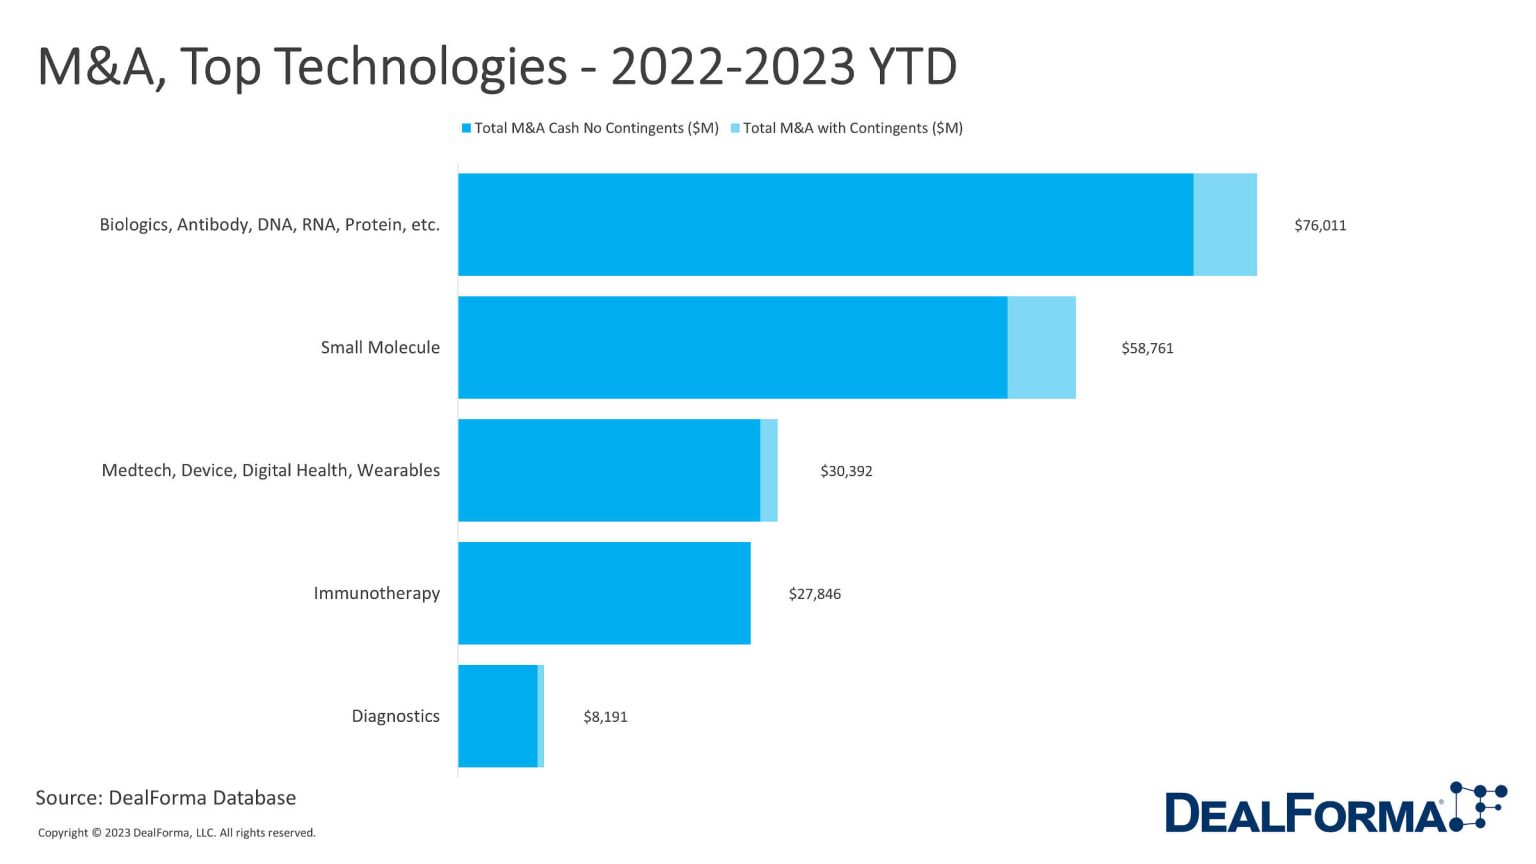 MA Top Technologies Since 2022